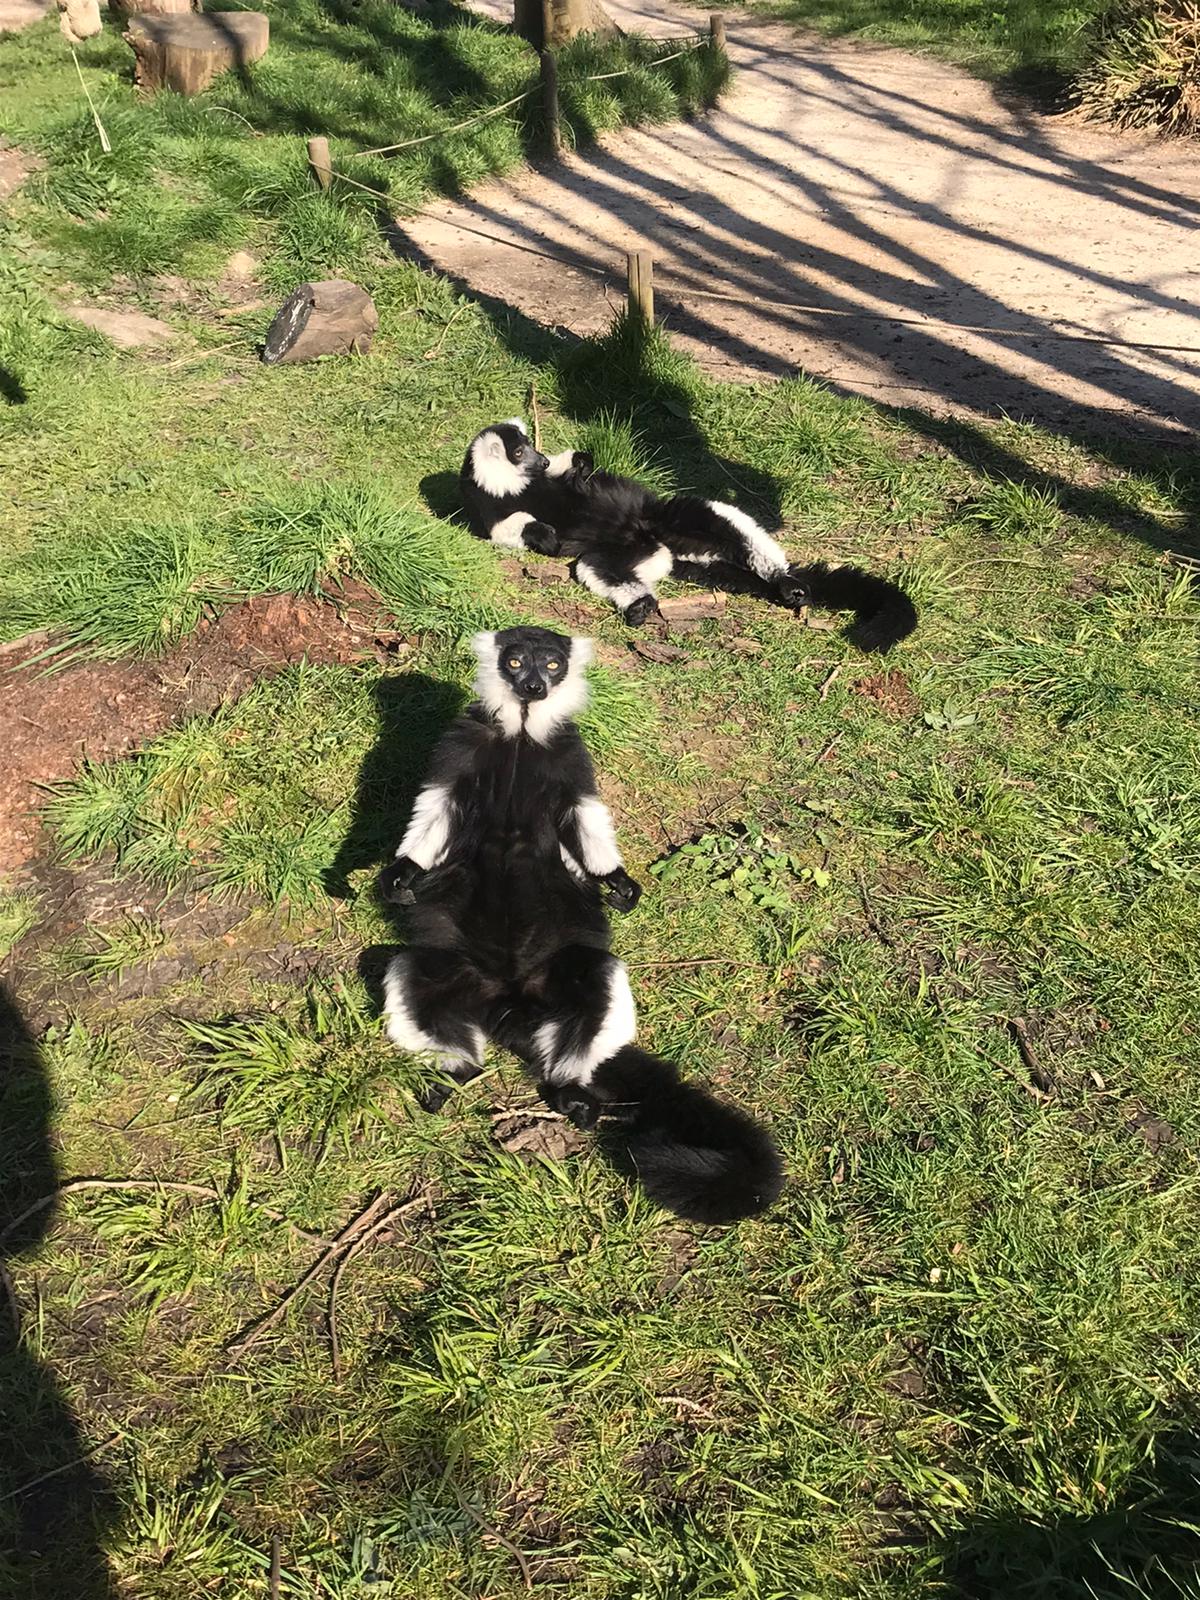 A black and white ruffed lemur sunbathing